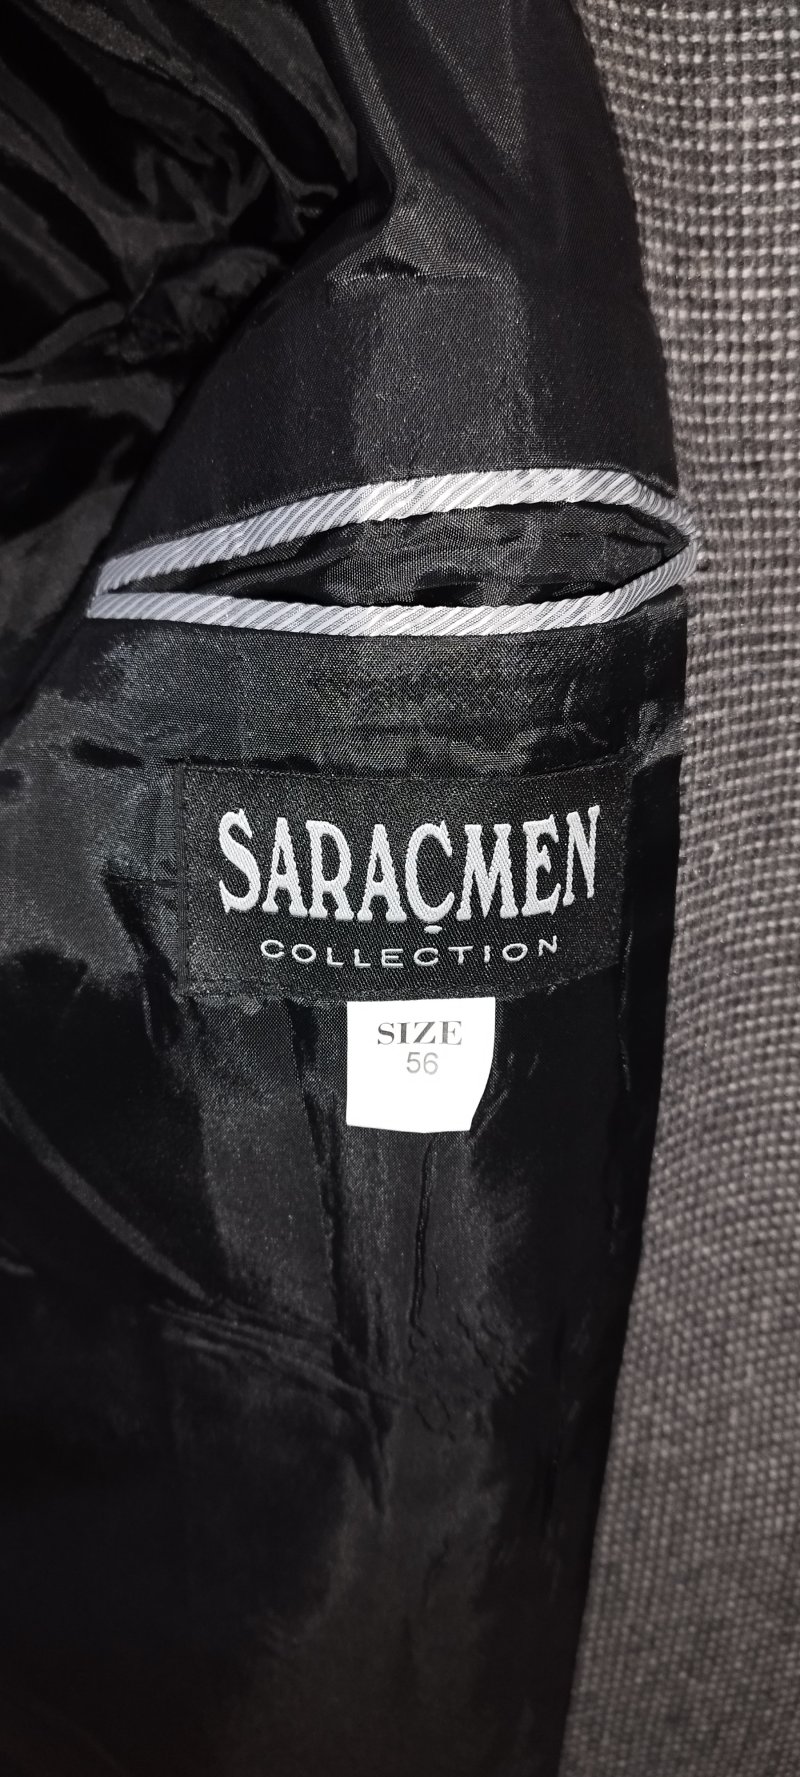 saracmen_gia-01_giacca-jacket-uomo-man_grigio-grey_15.jpg